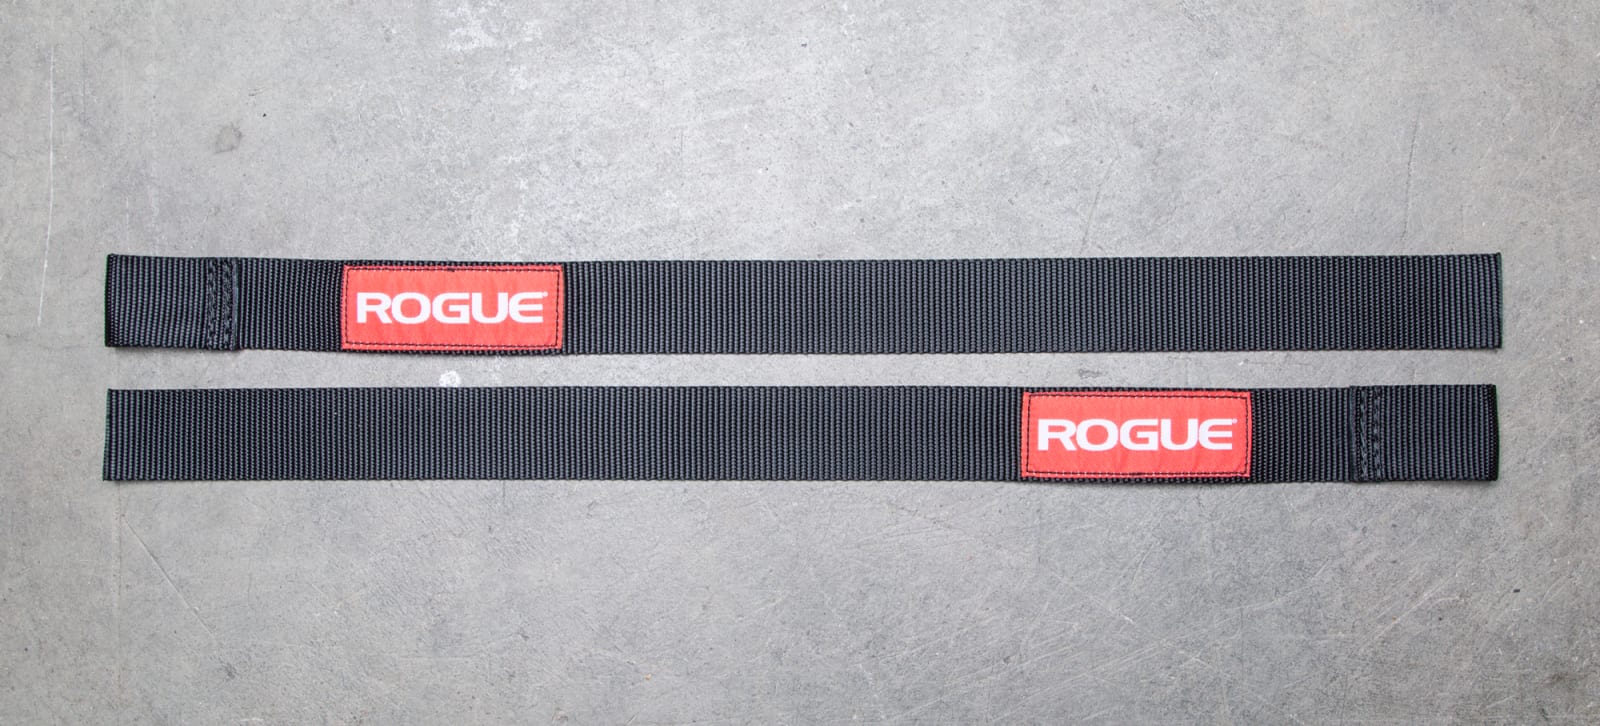 show original title Details about   Flux ™ Durable Nylon Rogue Straps Weightlifting Hooks Bar Wrist Bandages 